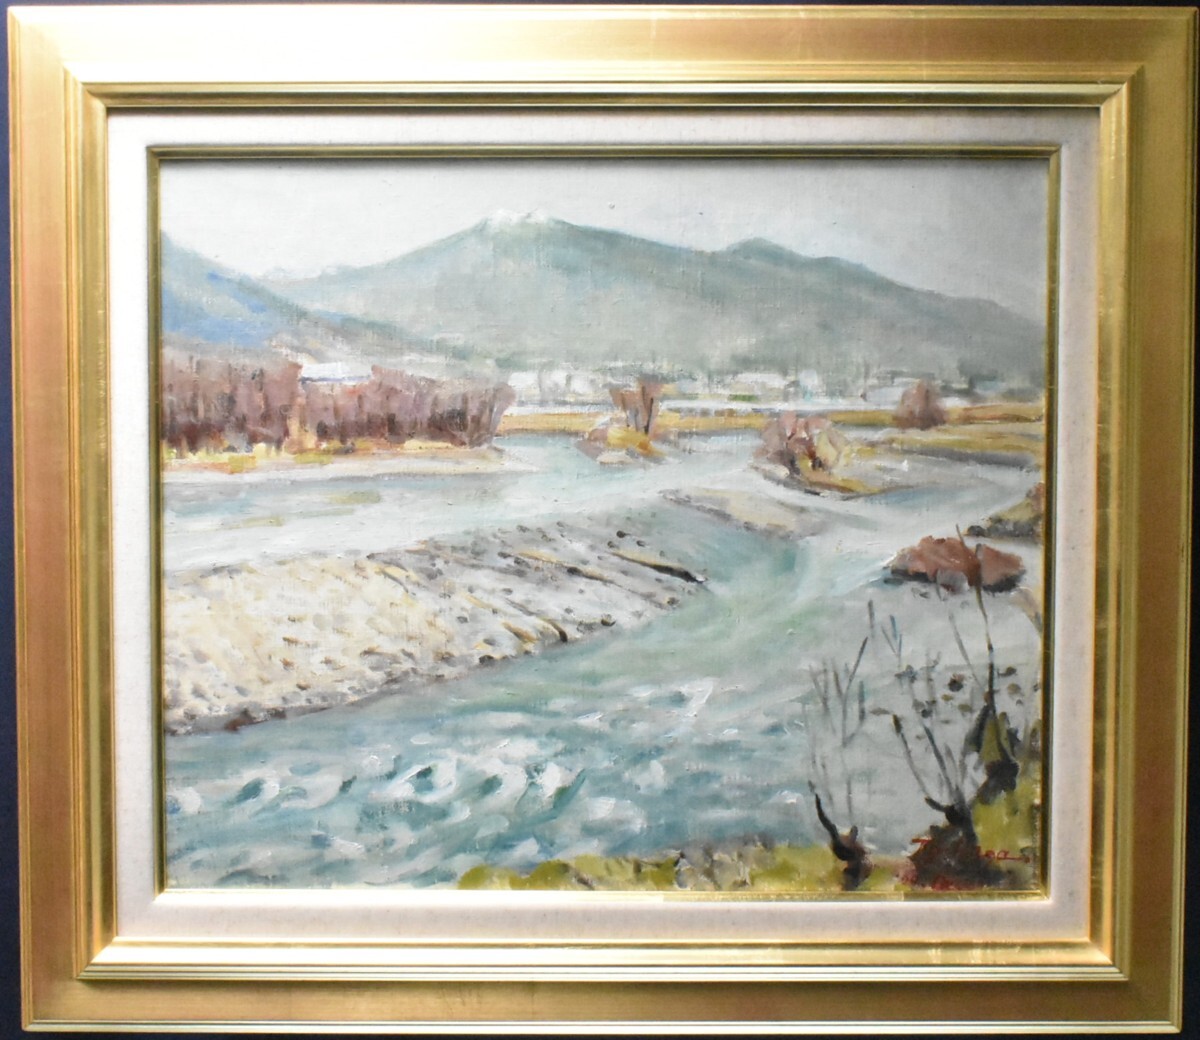 Tsukasa Narusawa 8F Peinture occidentale de la rivière Shinshu Chikuma [Galerie Masami], Peinture, Peinture à l'huile, Nature, Peinture de paysage